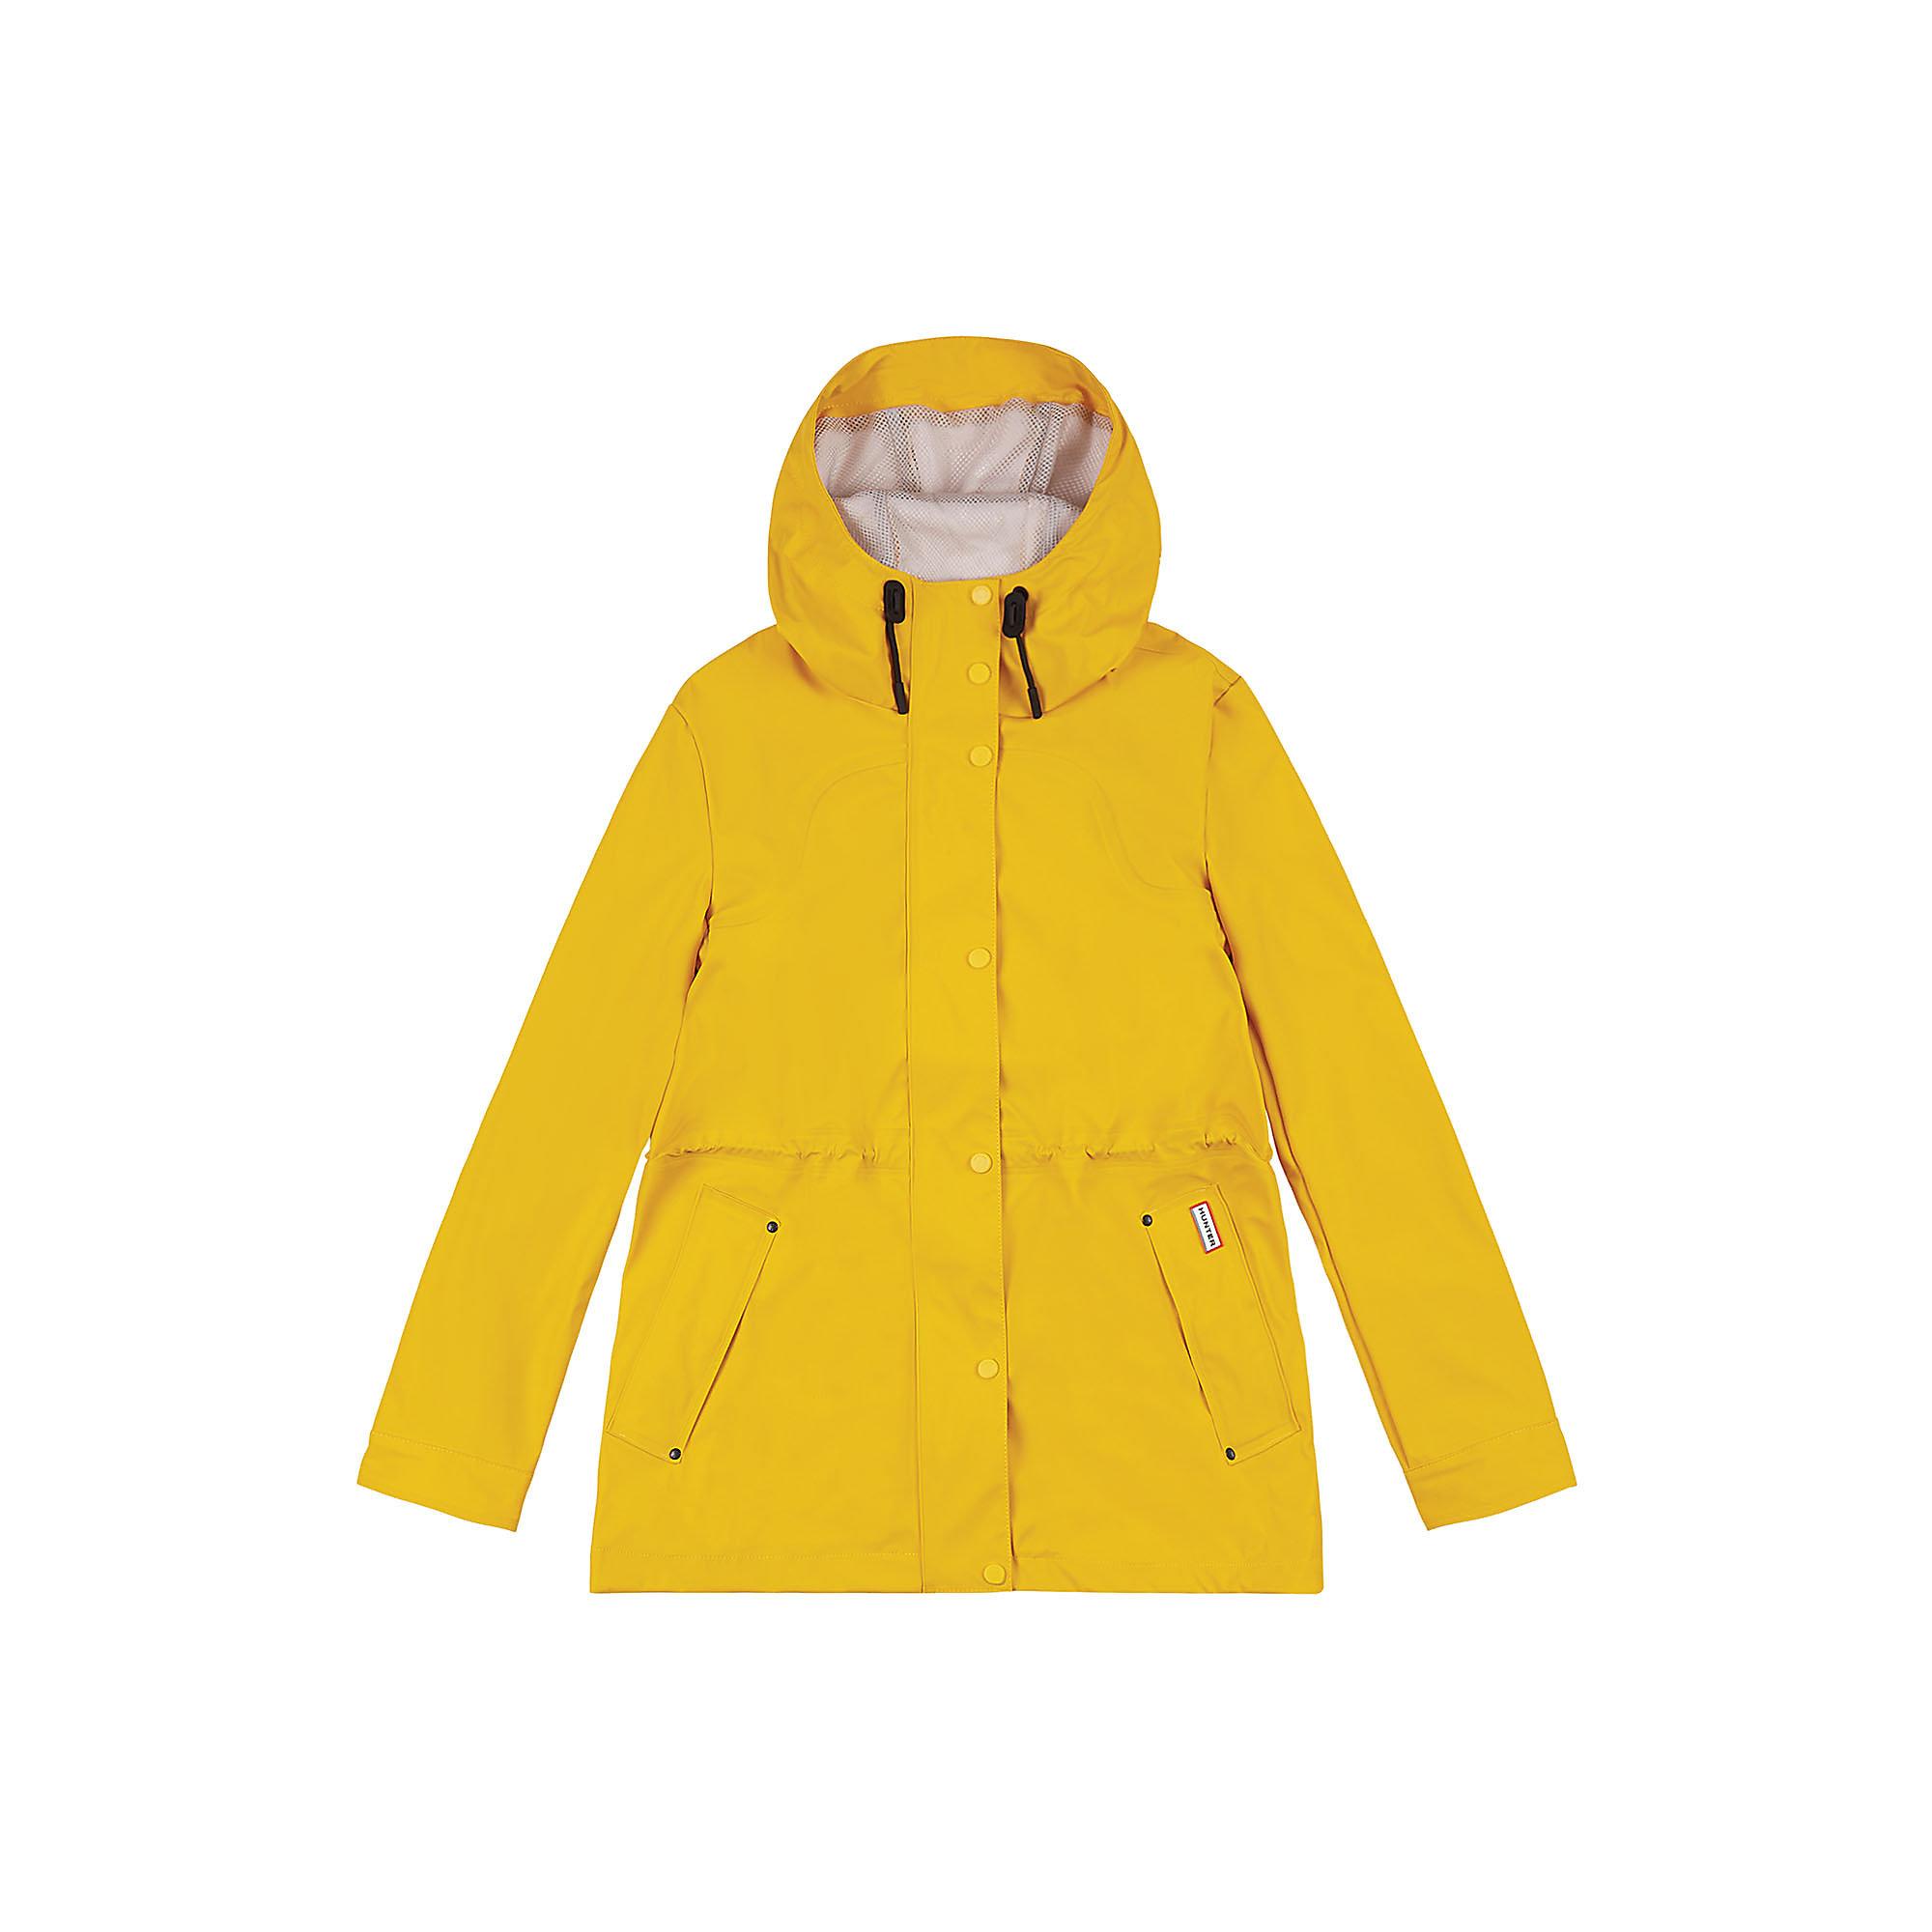 HUNTER Women's Original Lightweight Waterproof Jacket in Yellow - Lyst